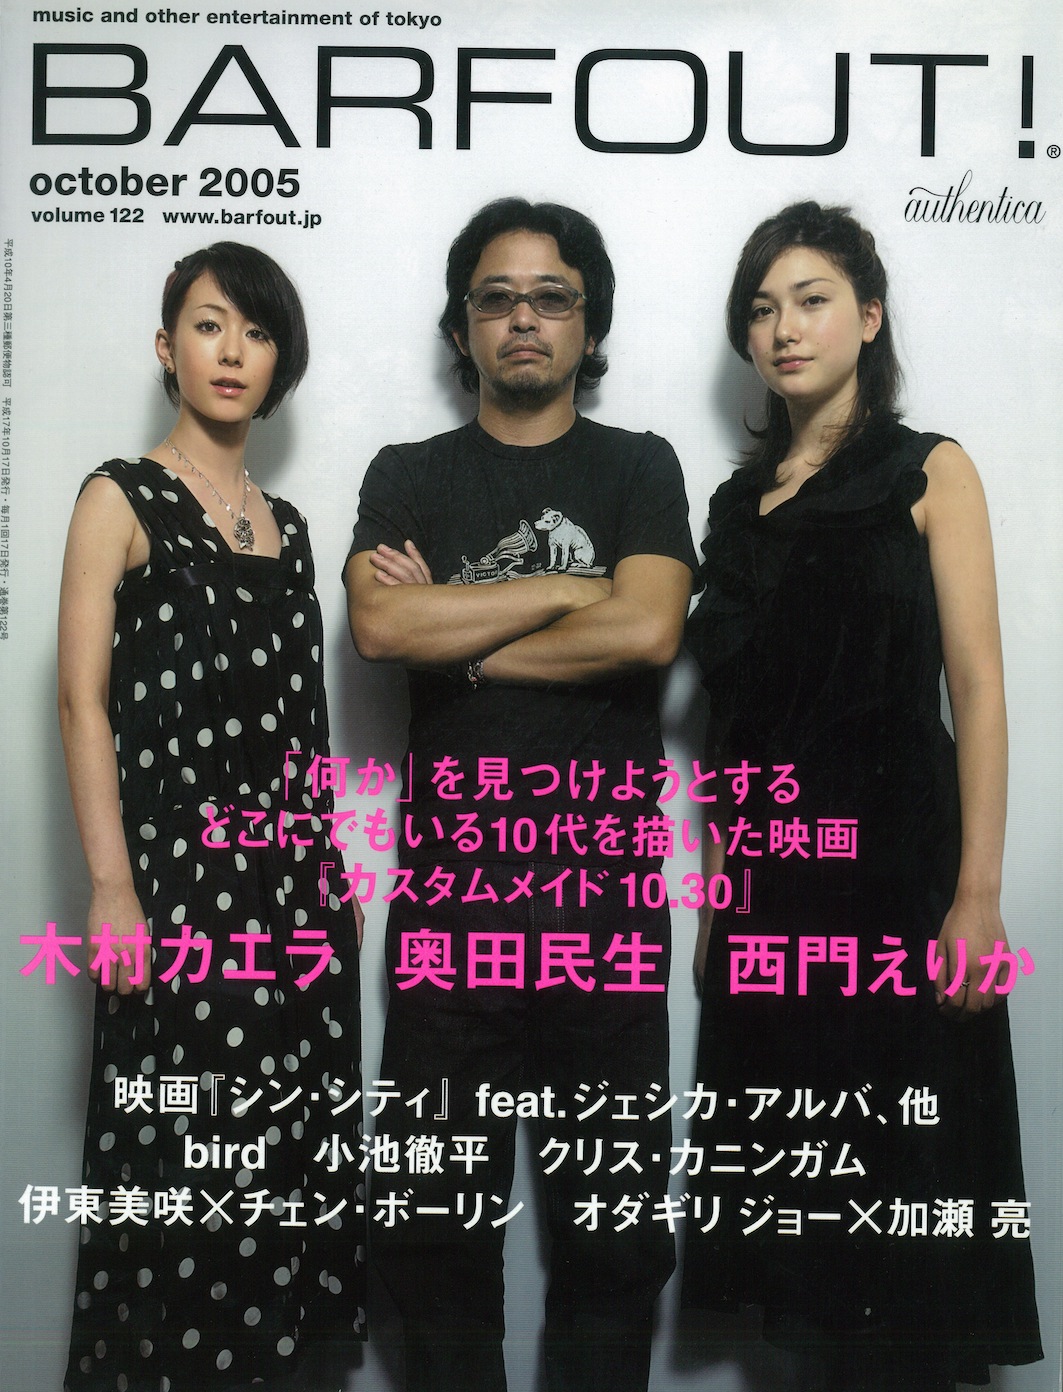 OCTOBER 2005 VOLUME 122